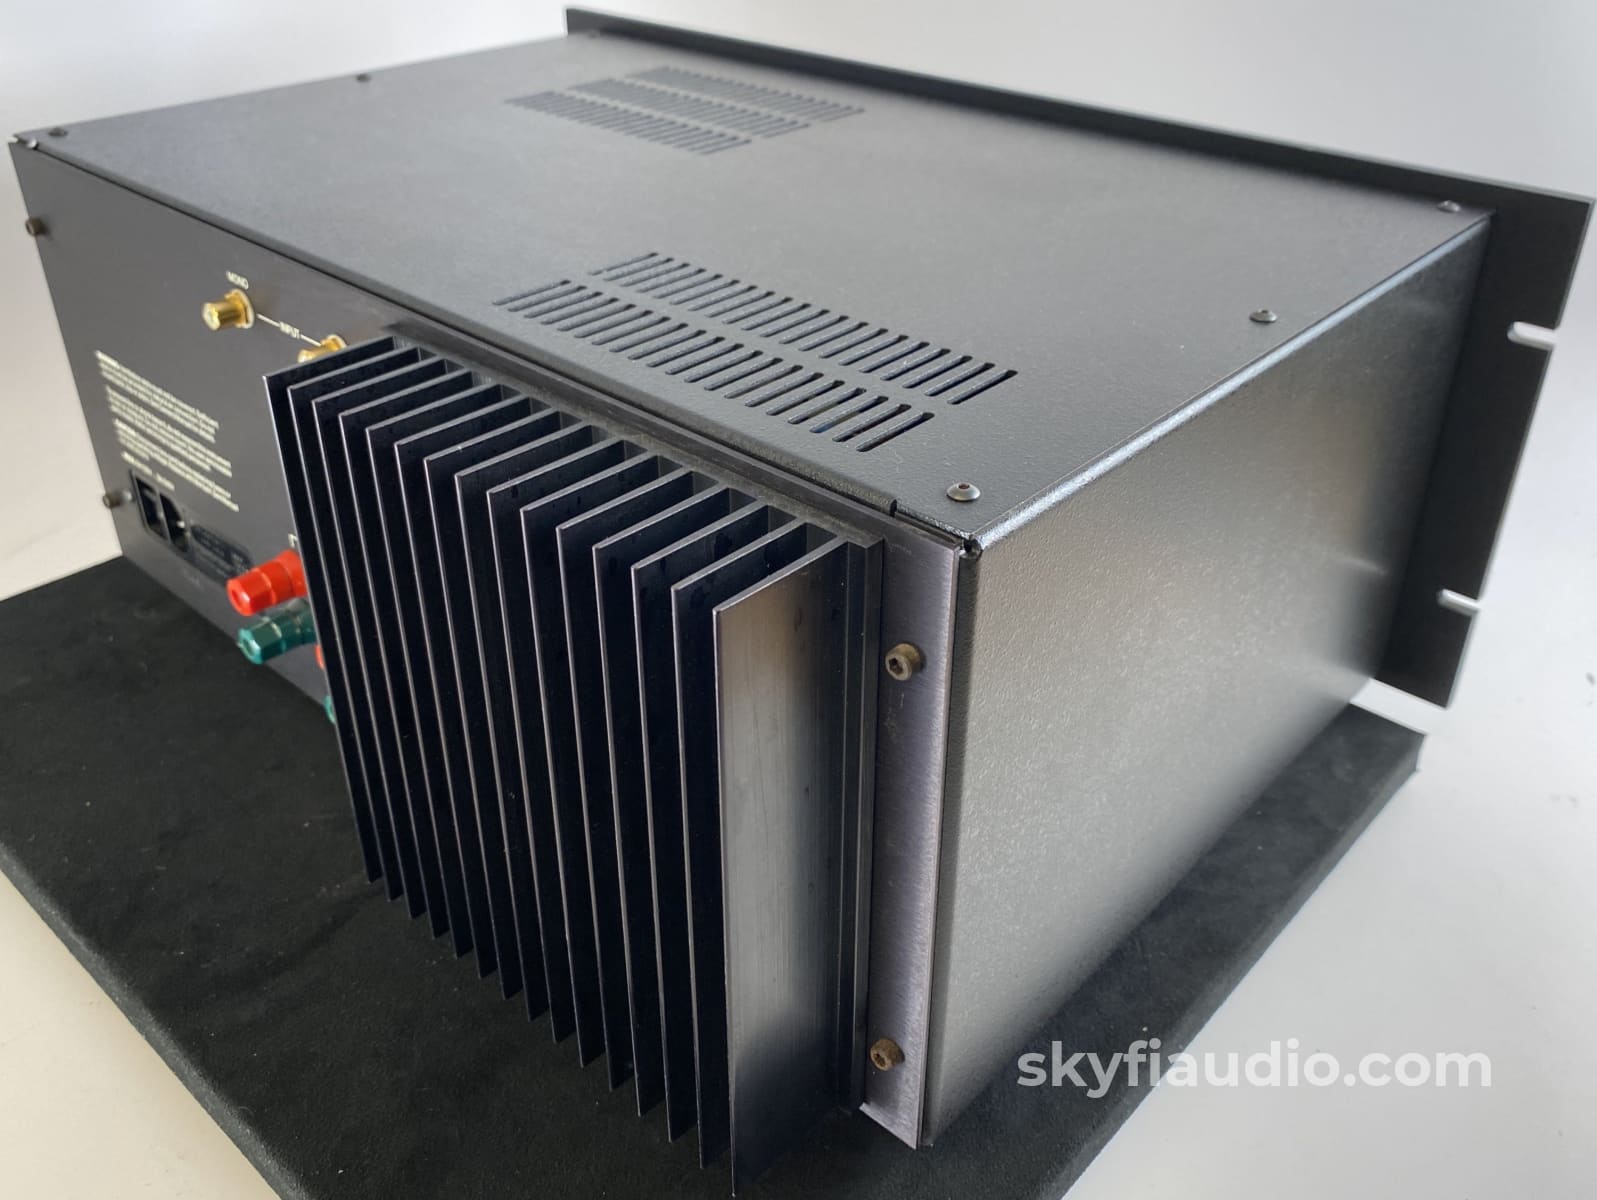 Bel (Brown Electronic Laboratories) 1001 Amplifier - Super Rare